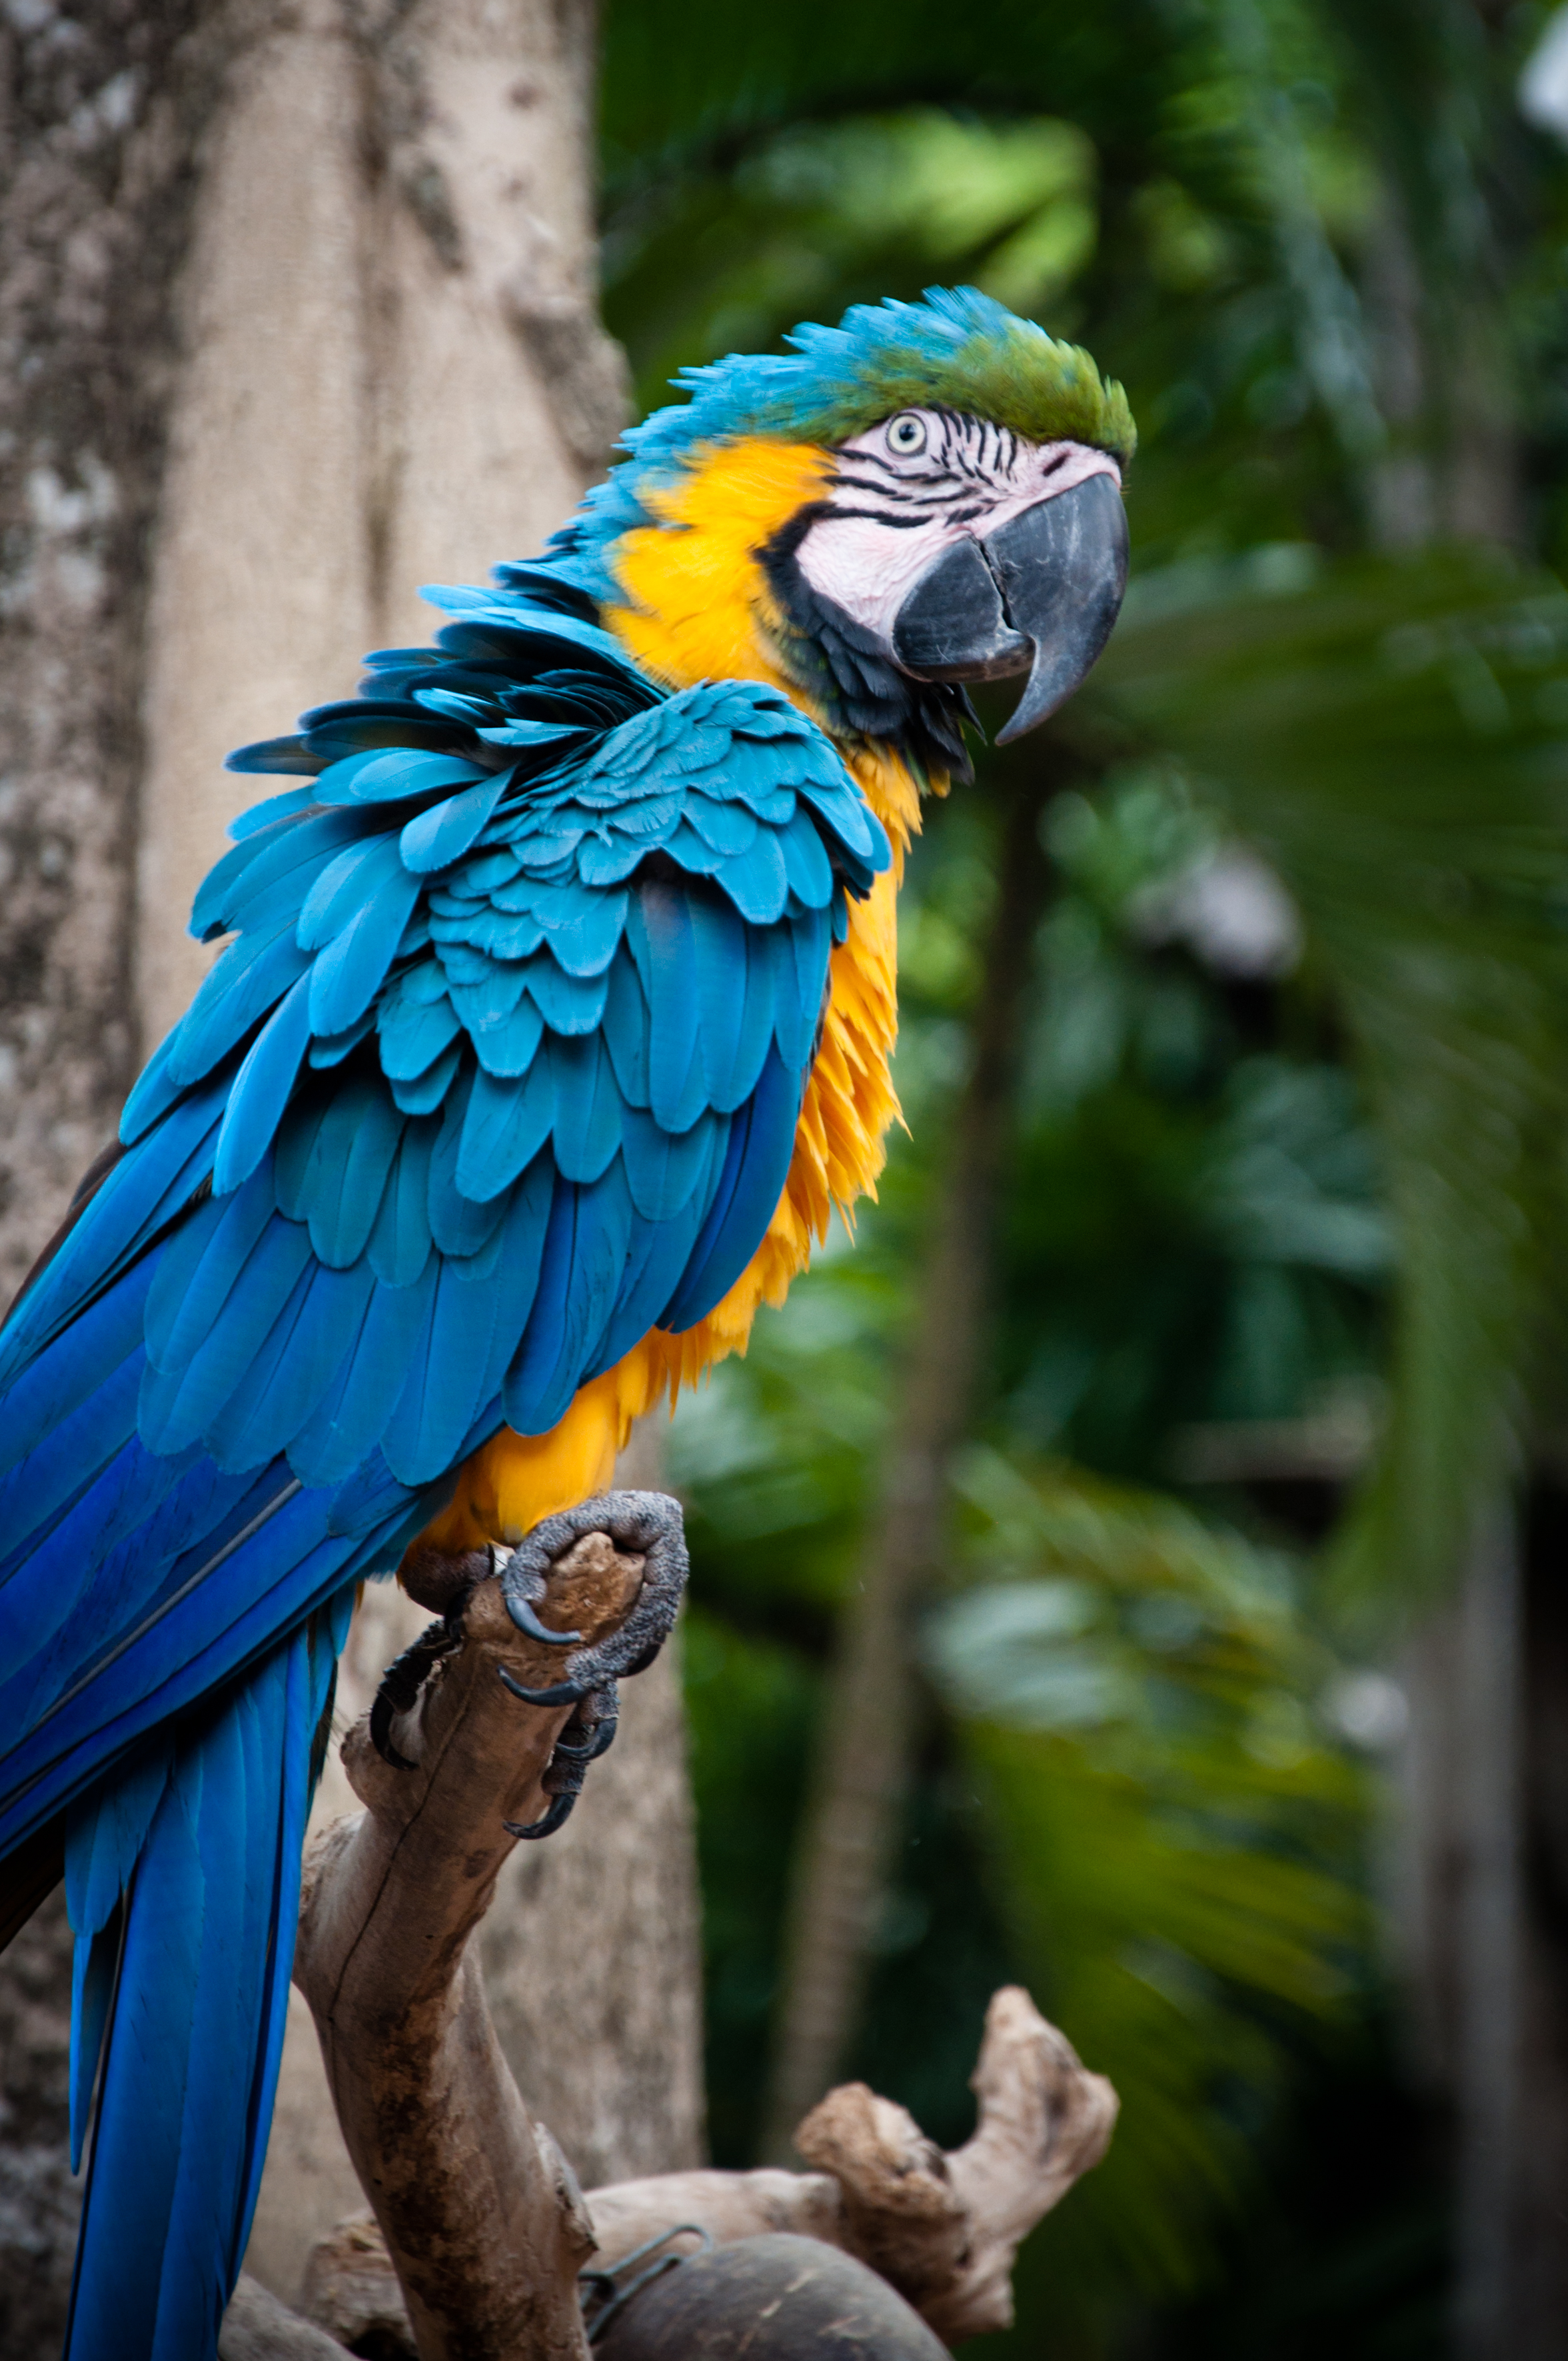 Free photo: Macaw parrot - Animal, Bird, Branch - Free Download - Jooinn